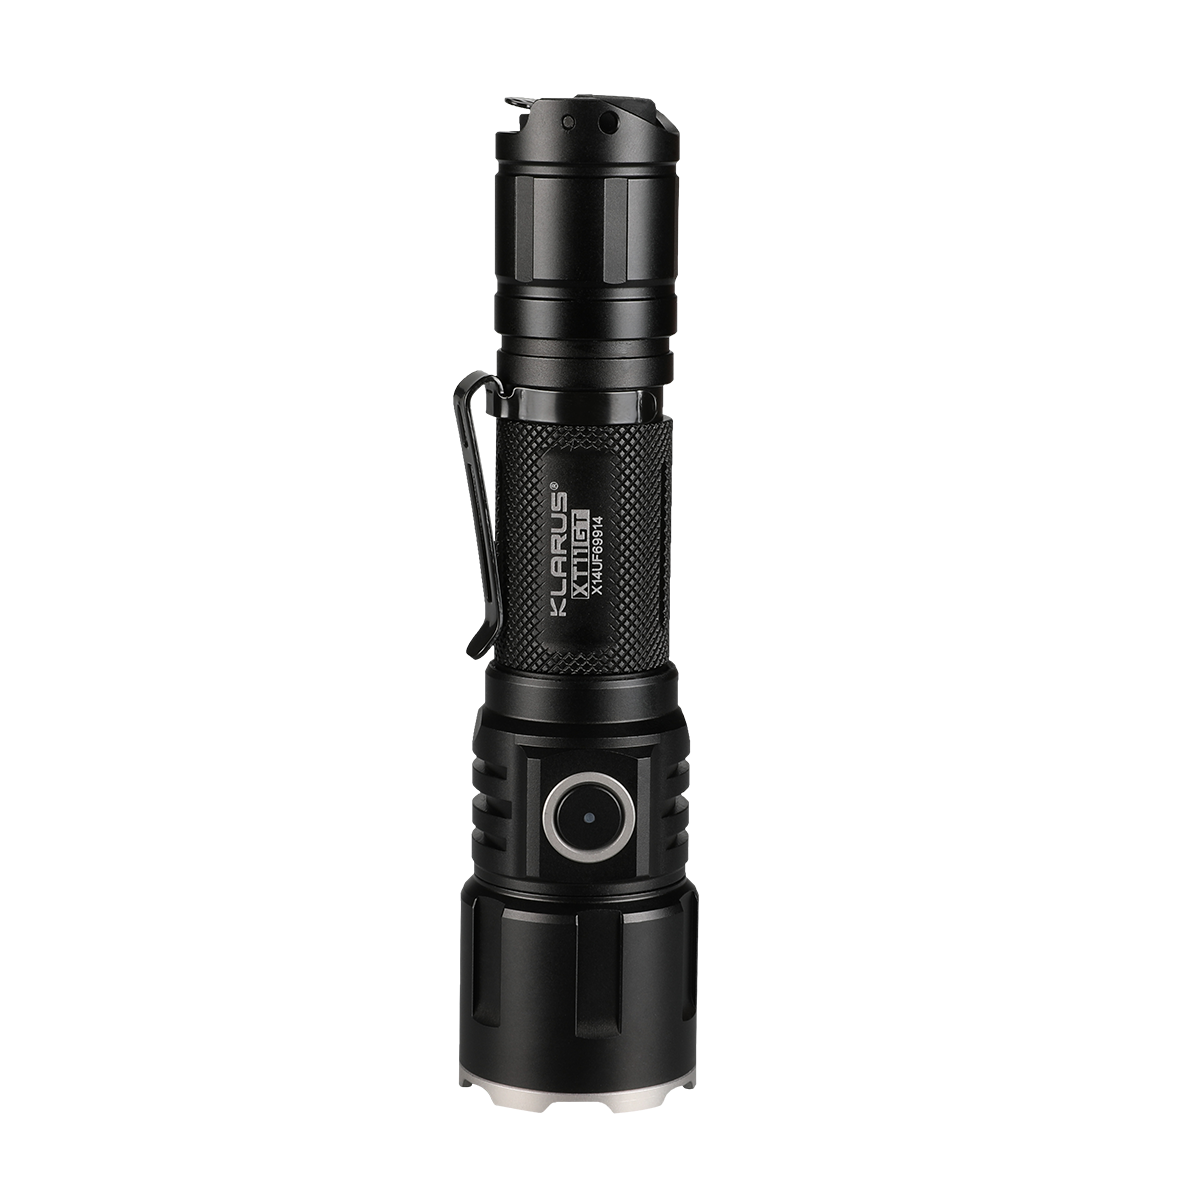 Klarus XT11GT  XHP35 HD LED 2000 Lumens Rechargeable Tactical flashlight